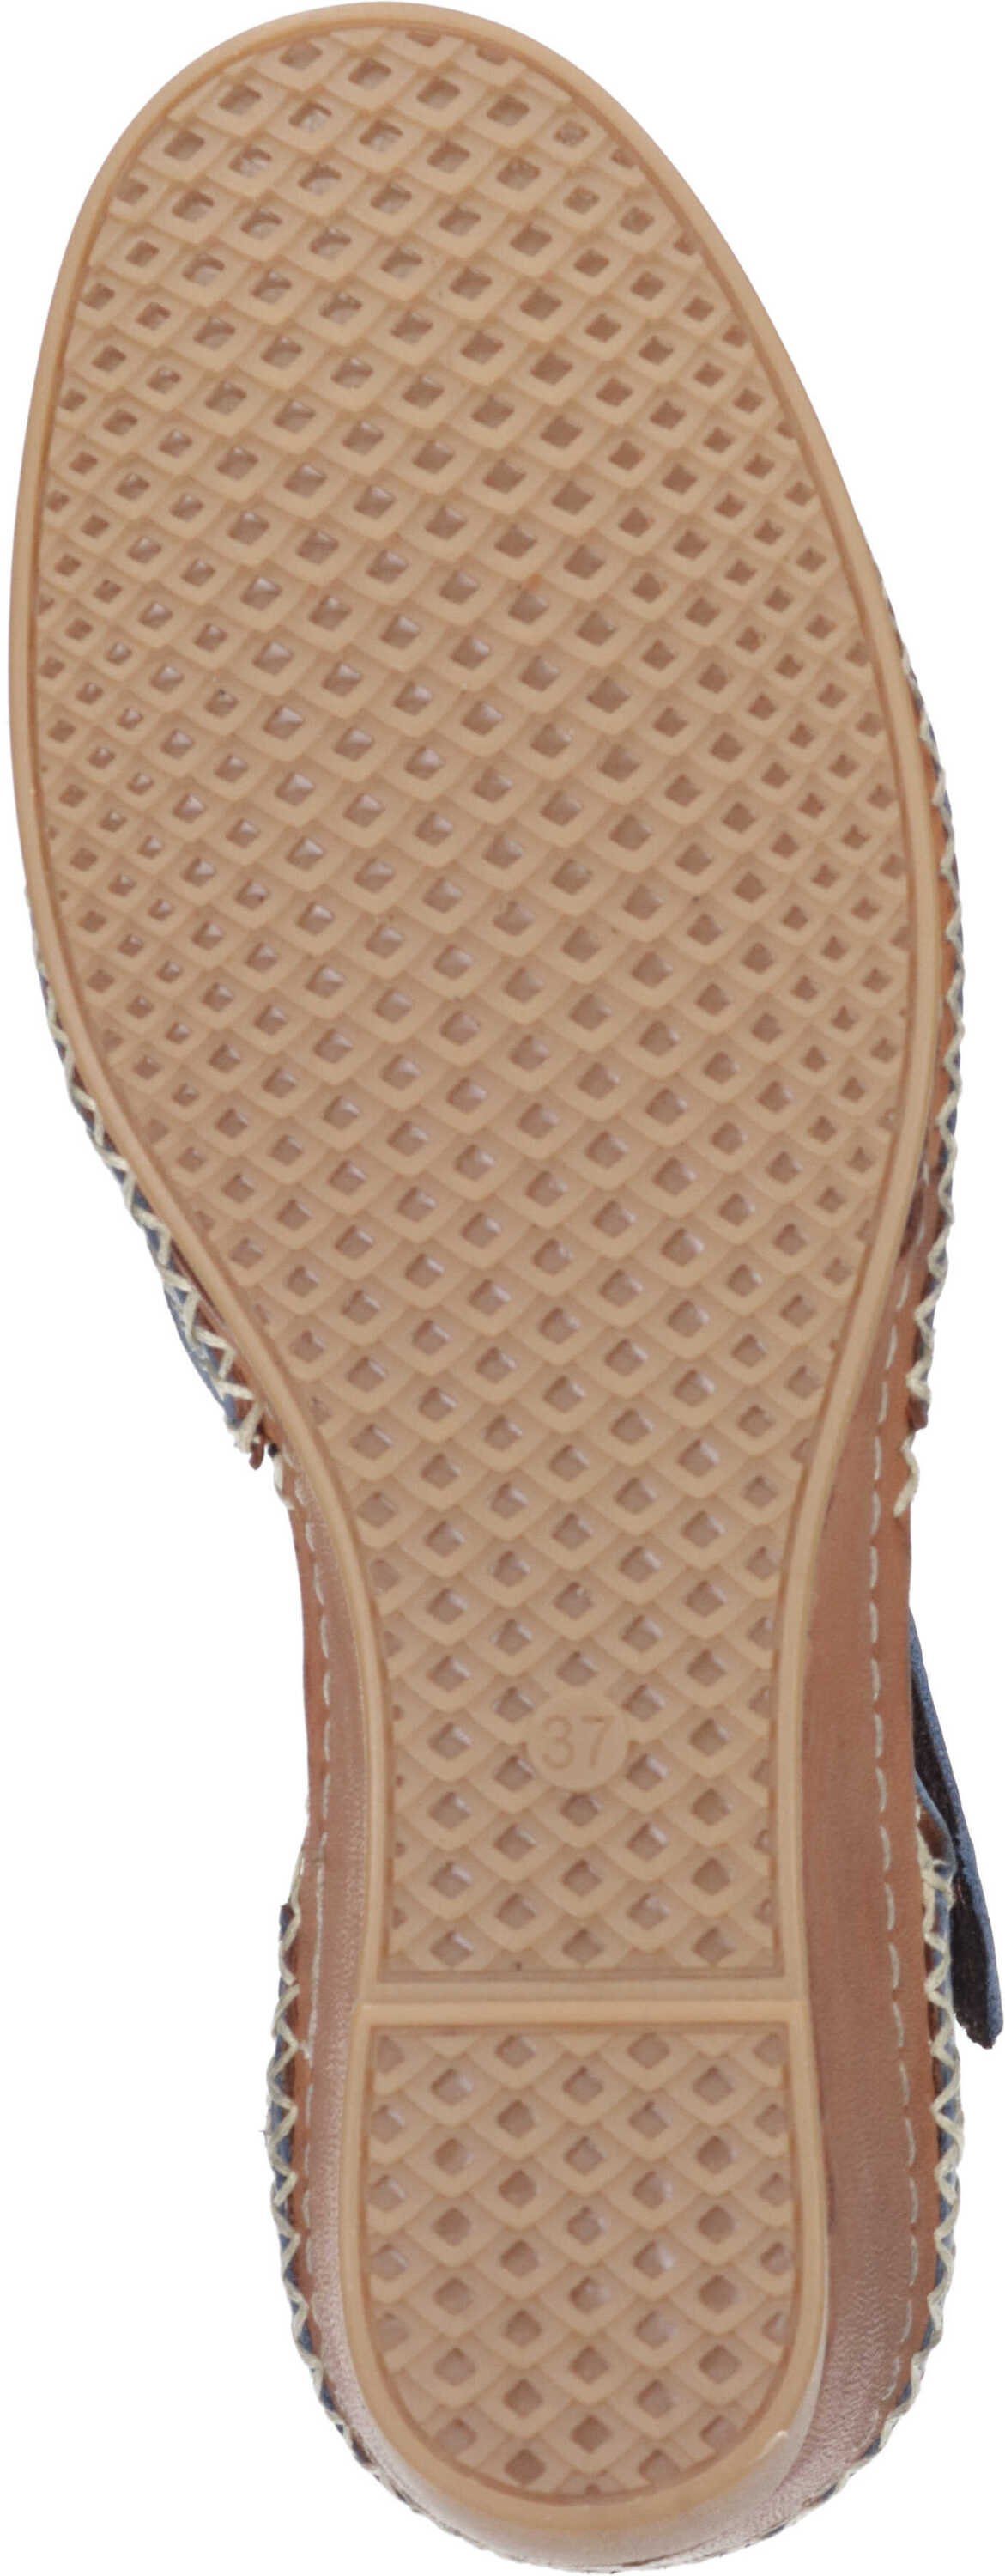 Leder Sandalette aus Manitu echtem Sandalen